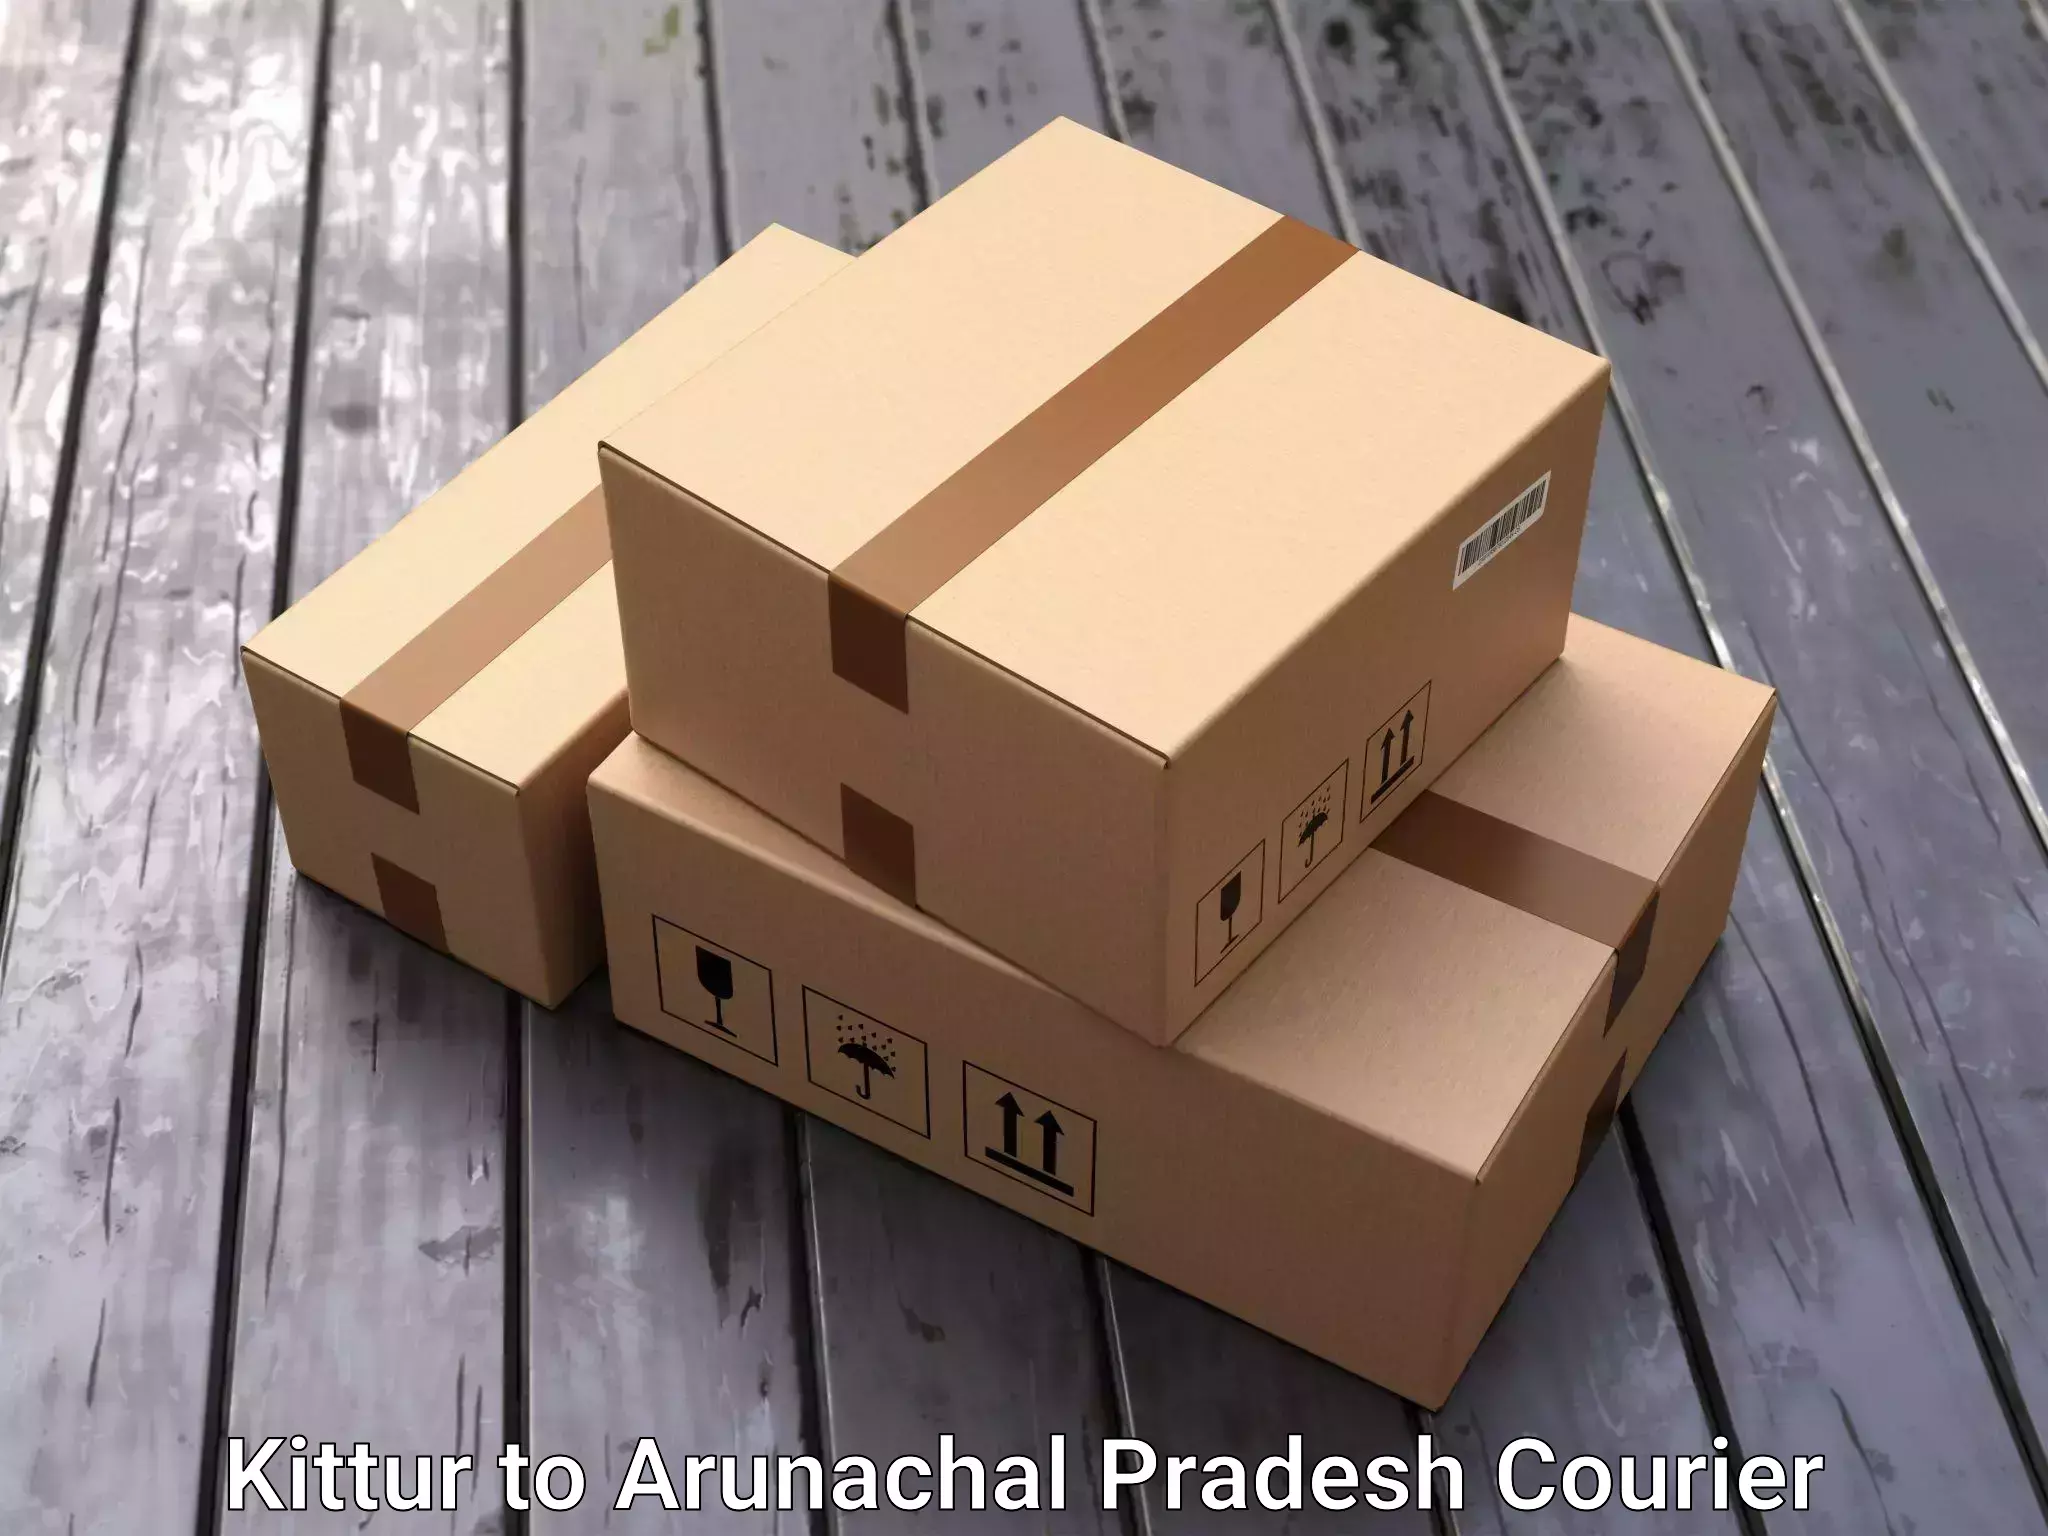 Professional furniture movers Kittur to Arunachal Pradesh